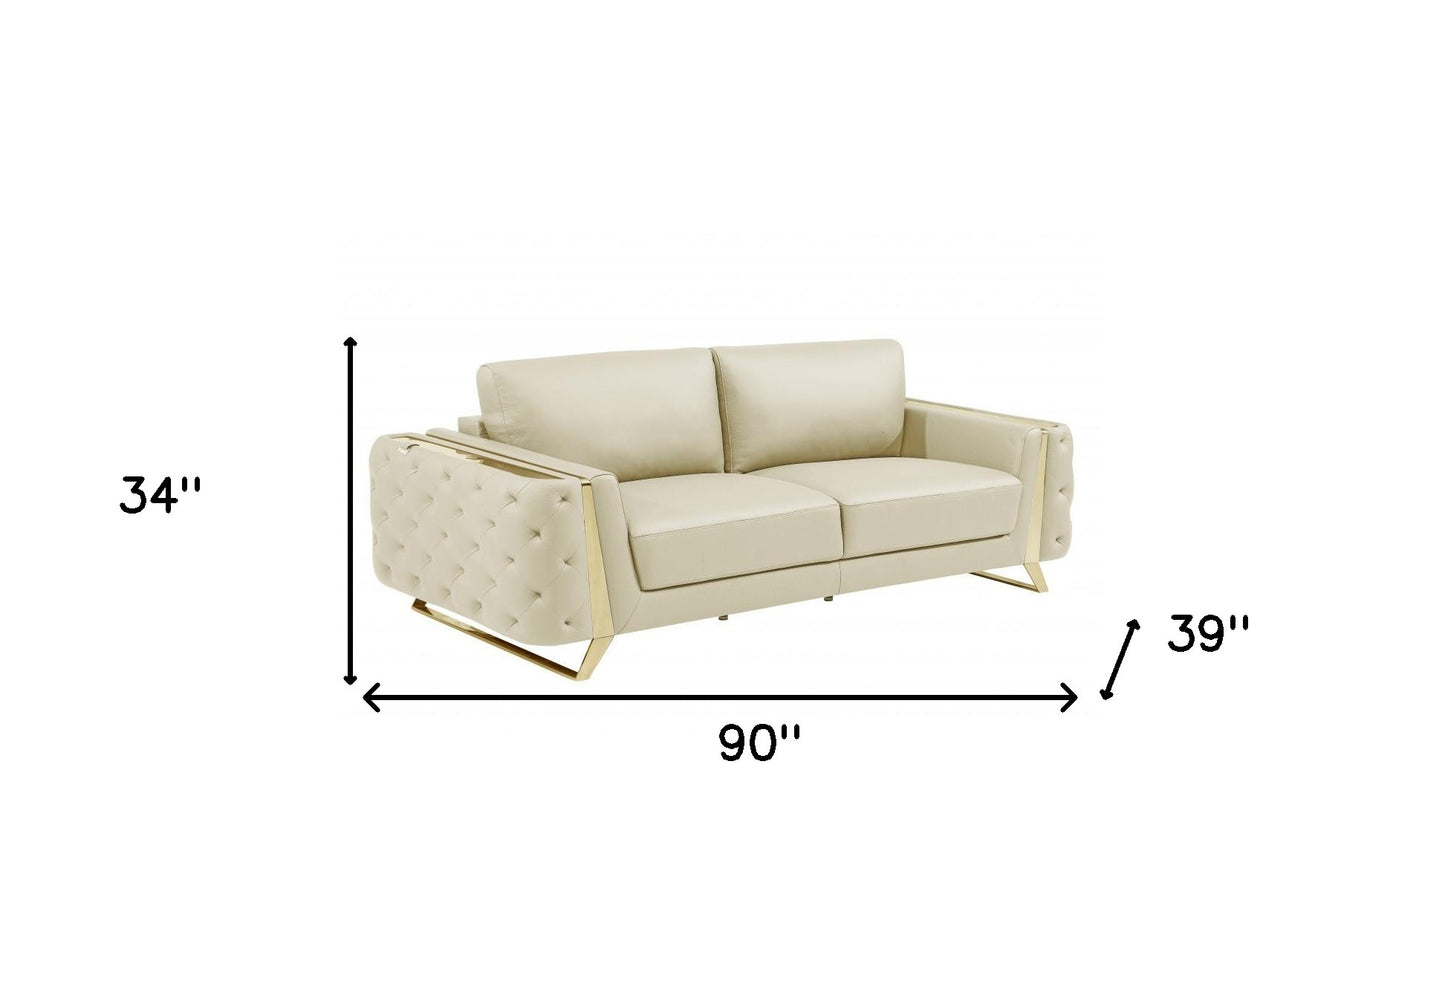 90" Beige And Gold Italian Leather Sofa